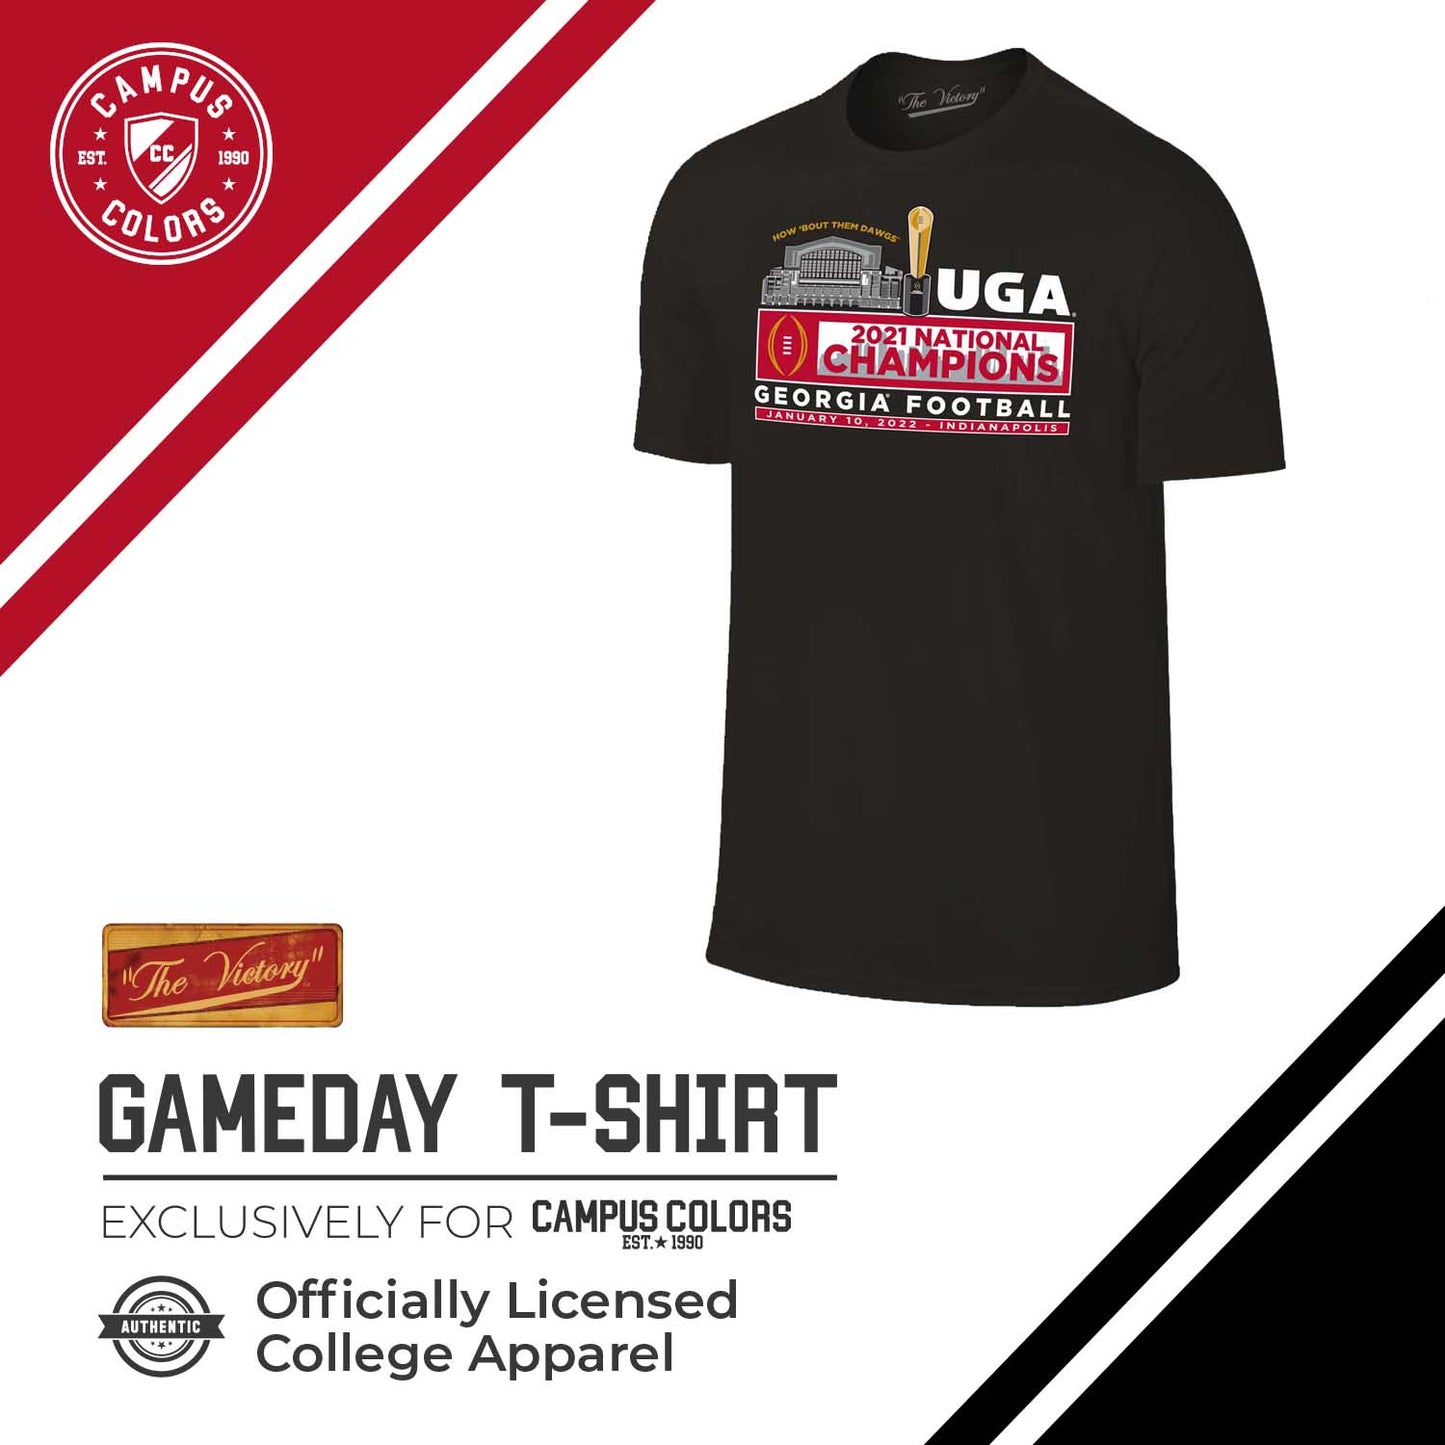 Georgia Bulldogs  2021 Adult Undisputed National Champions Short Sleeve T-Shirt